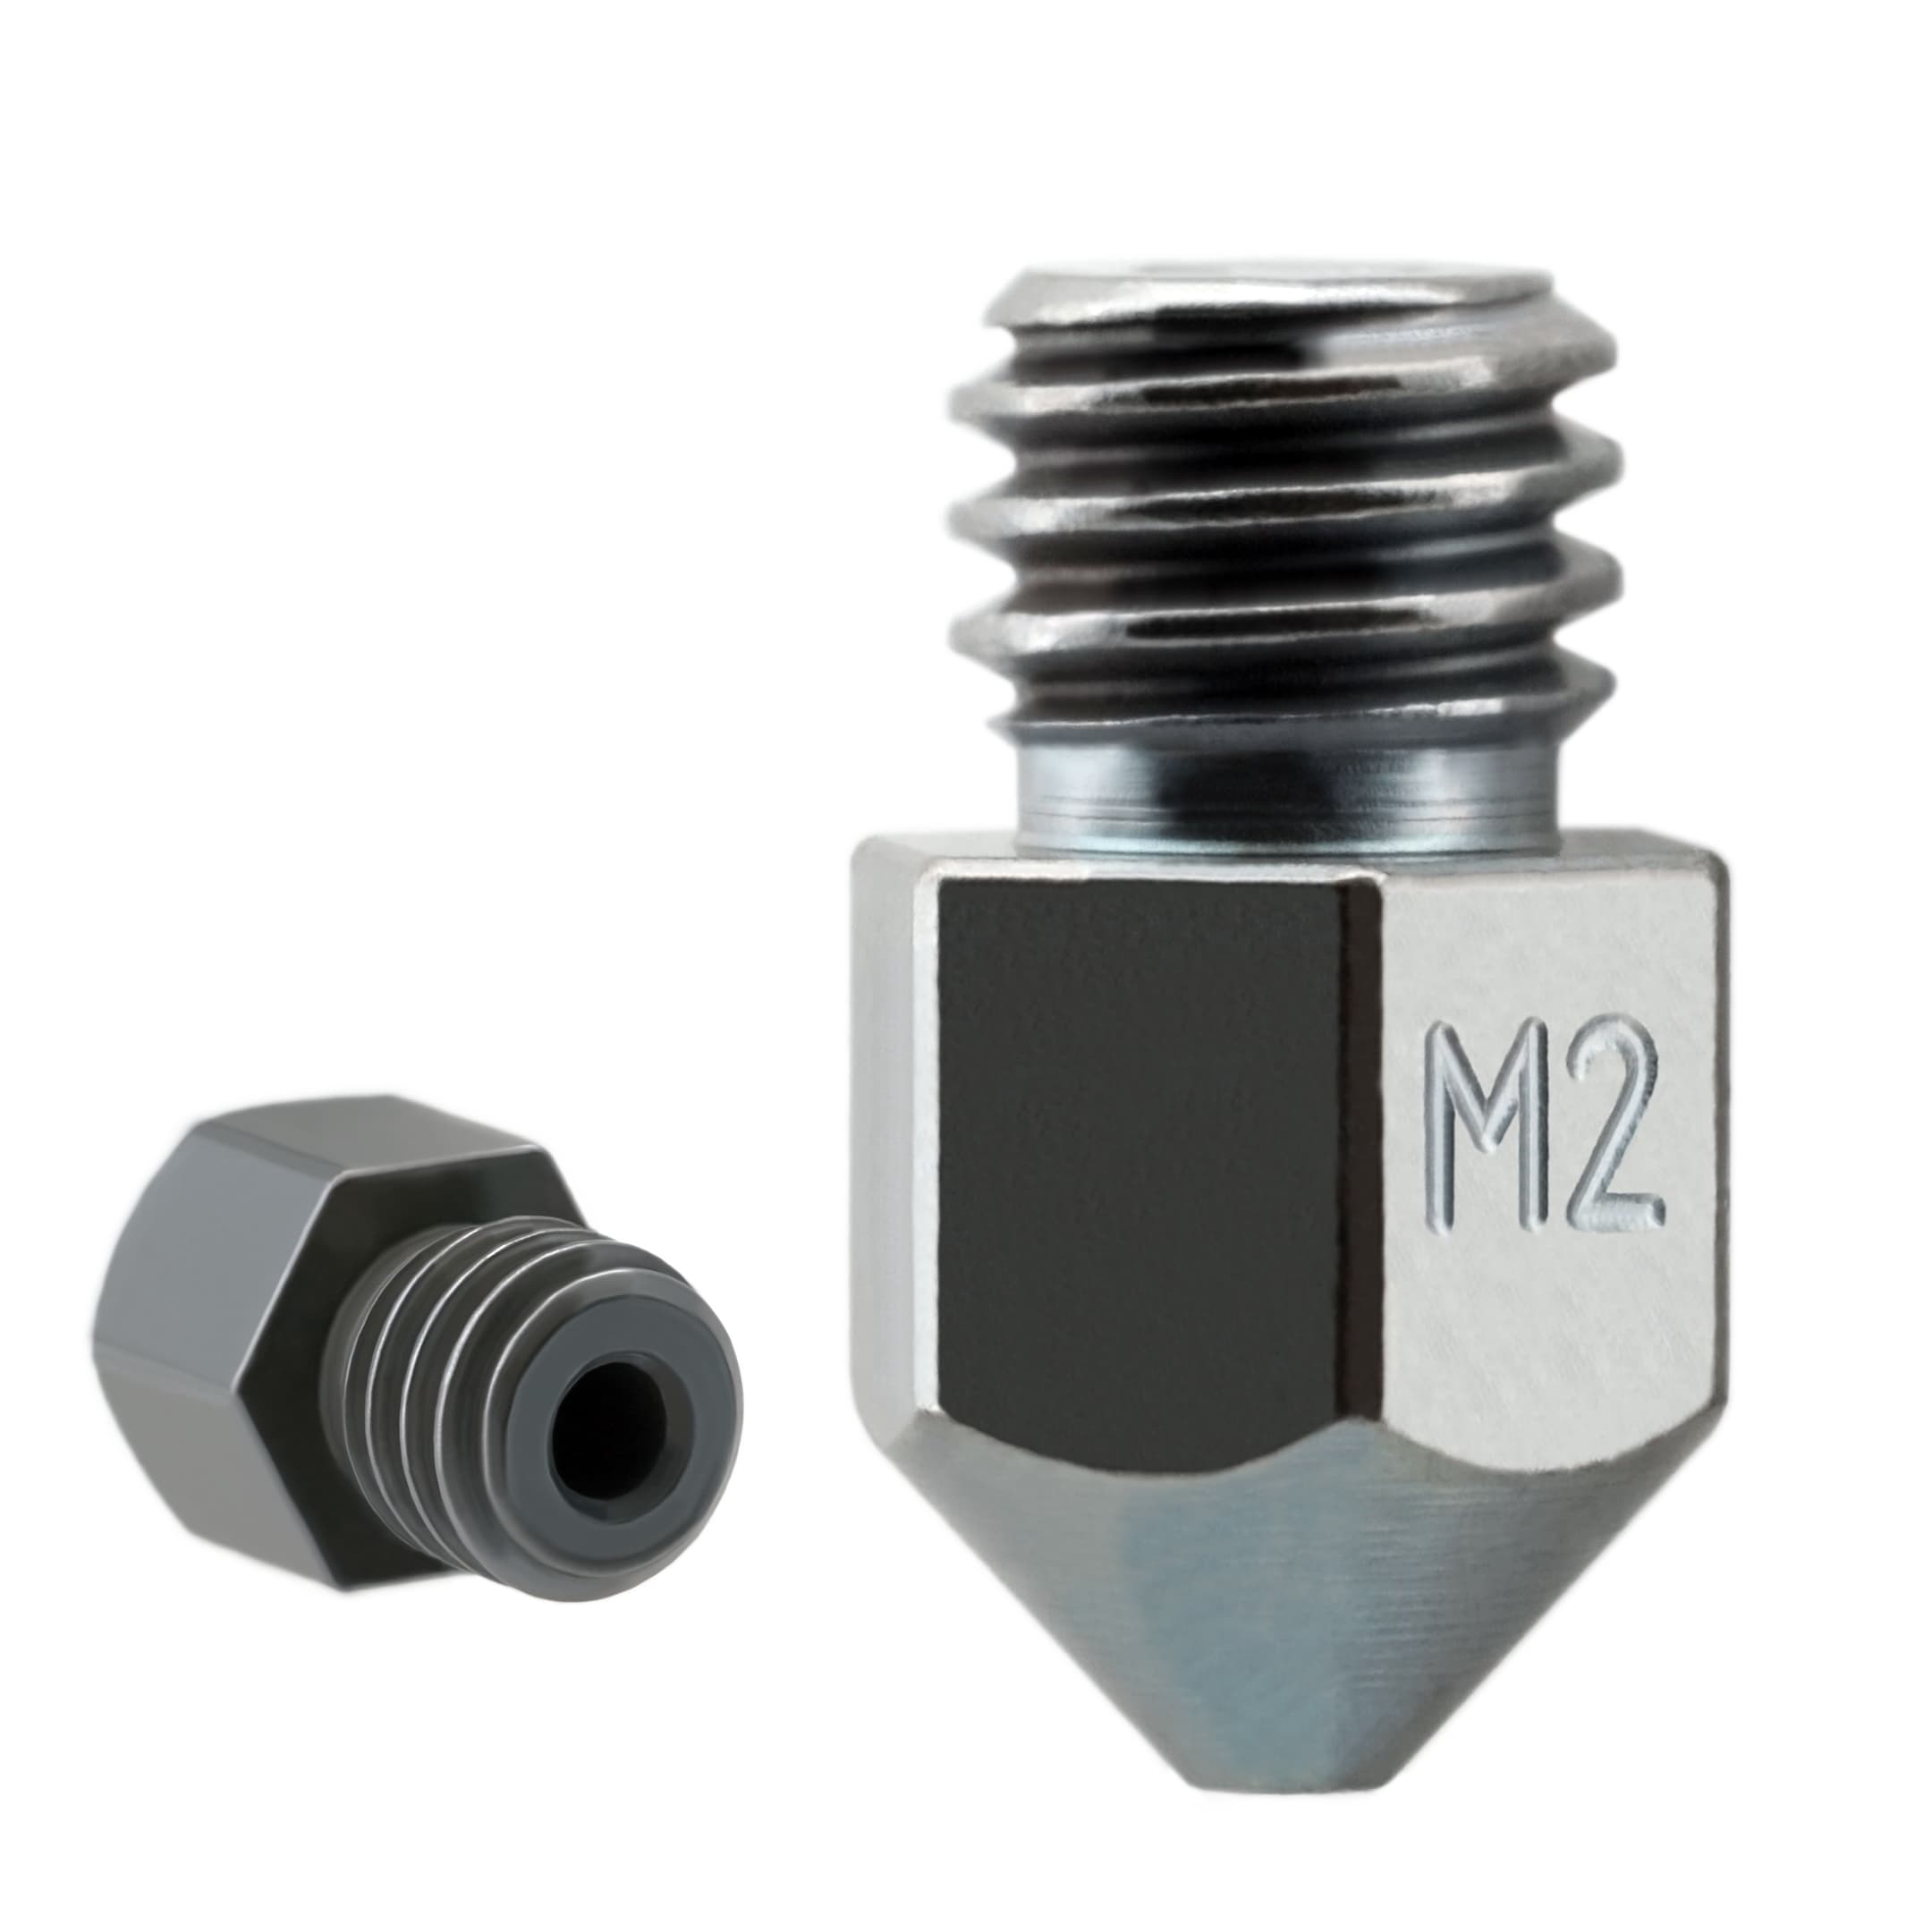 Micro Swiss M2 Hardened High Speed Steel Nozzle - MK8 (CR10 / Ender / Tornado / MakerBot)